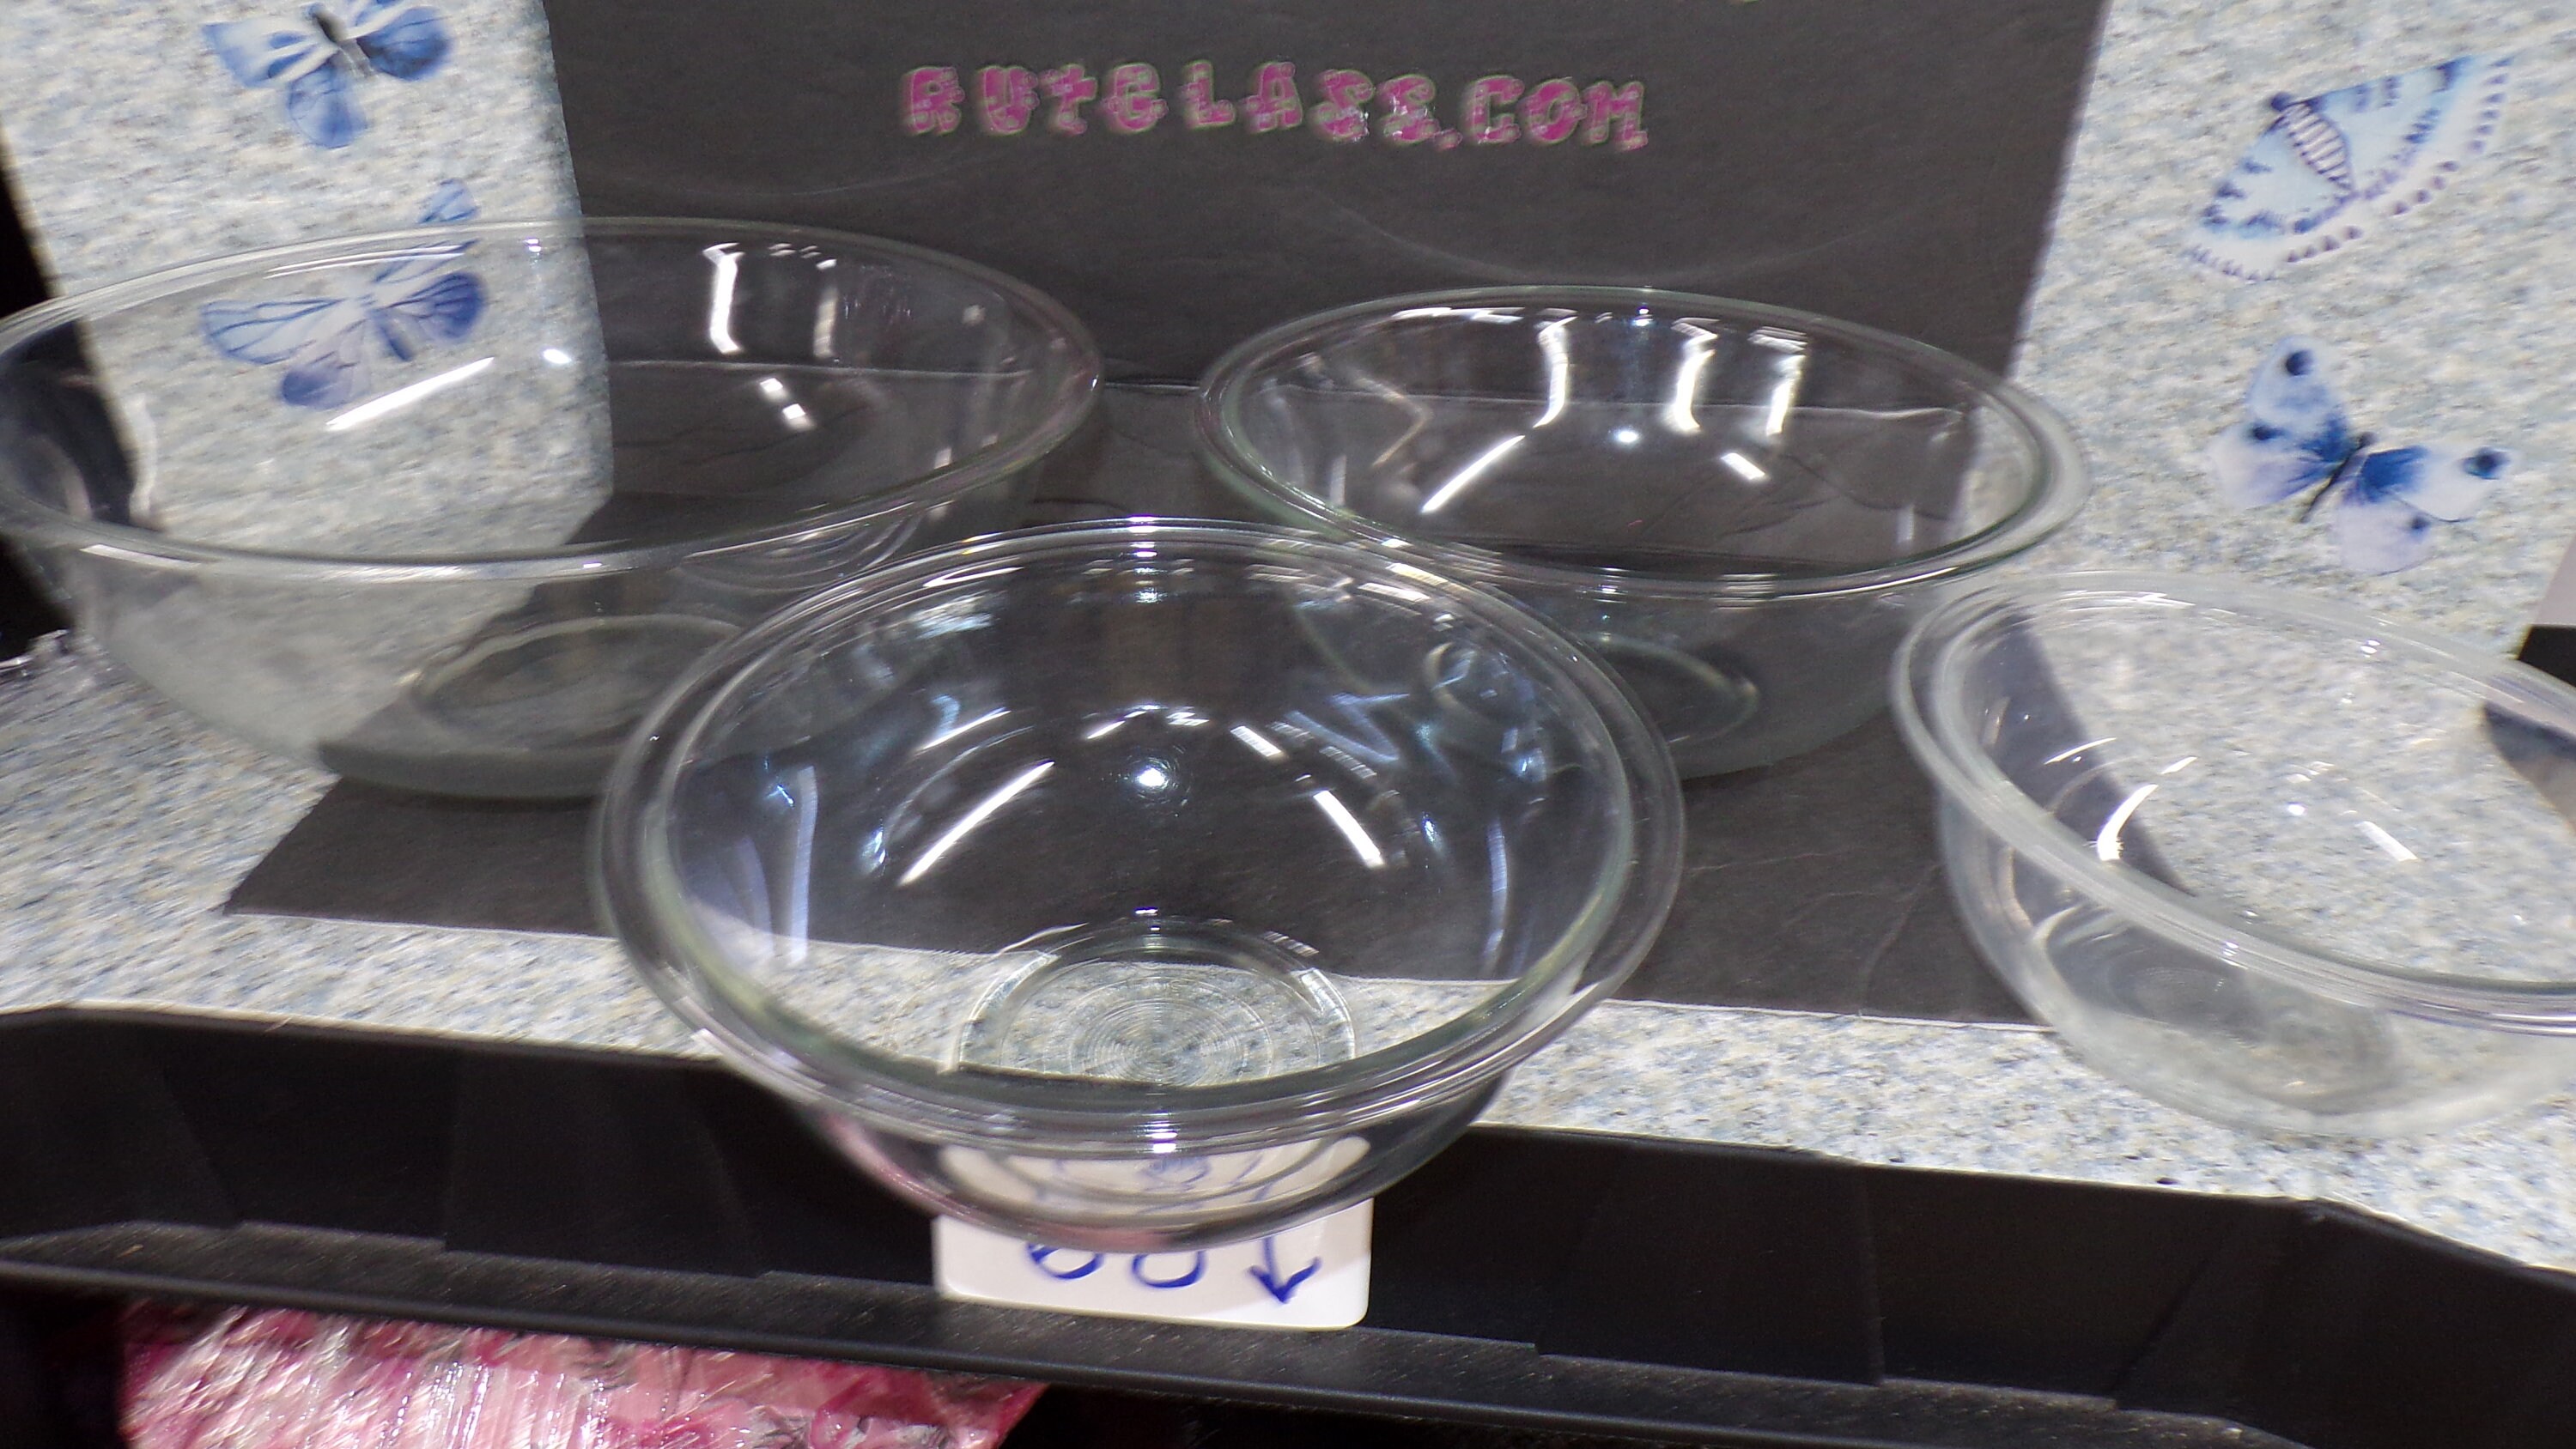 Pyrex 323 1.5qt and 325 2.5qt Glass Mixing Bowls - 2-Pack